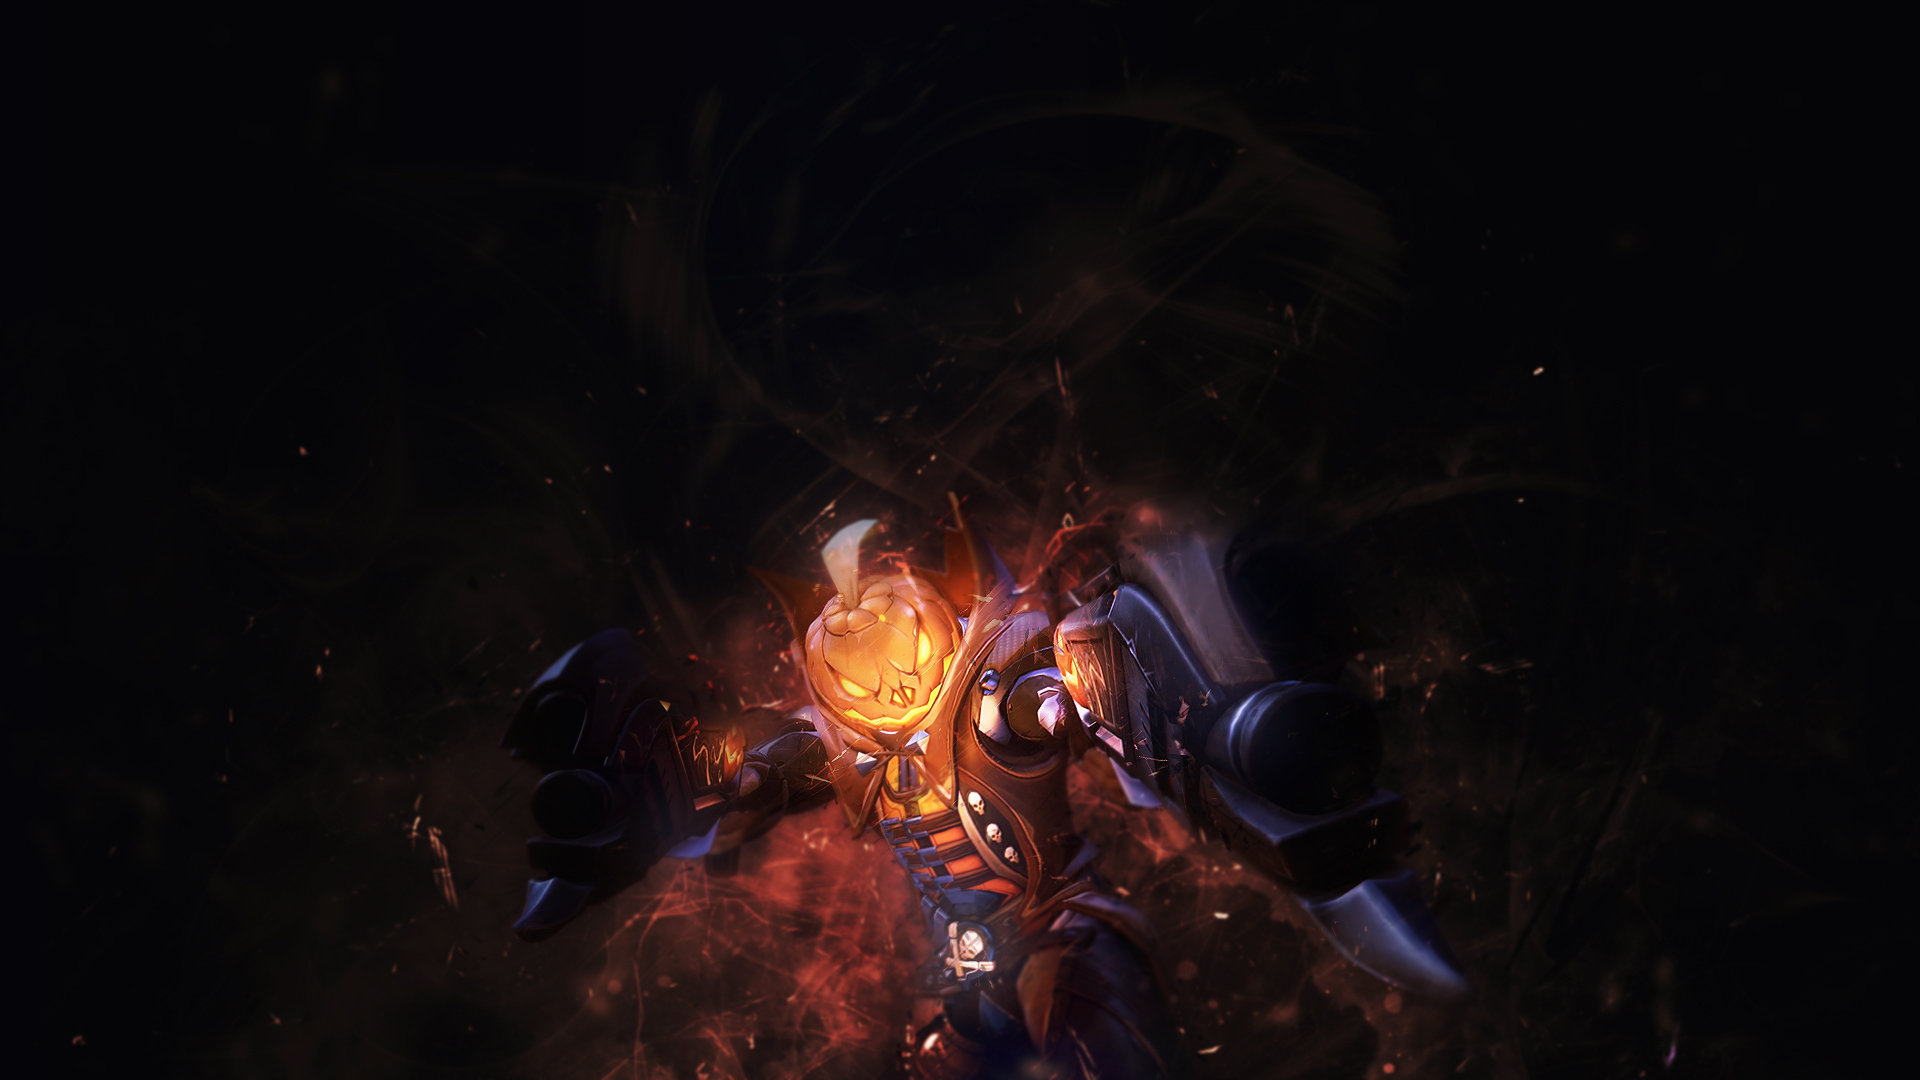 Pumpkin Reaper - Overwatch Wallpaper by RaycoreTheCrawler on DeviantArt